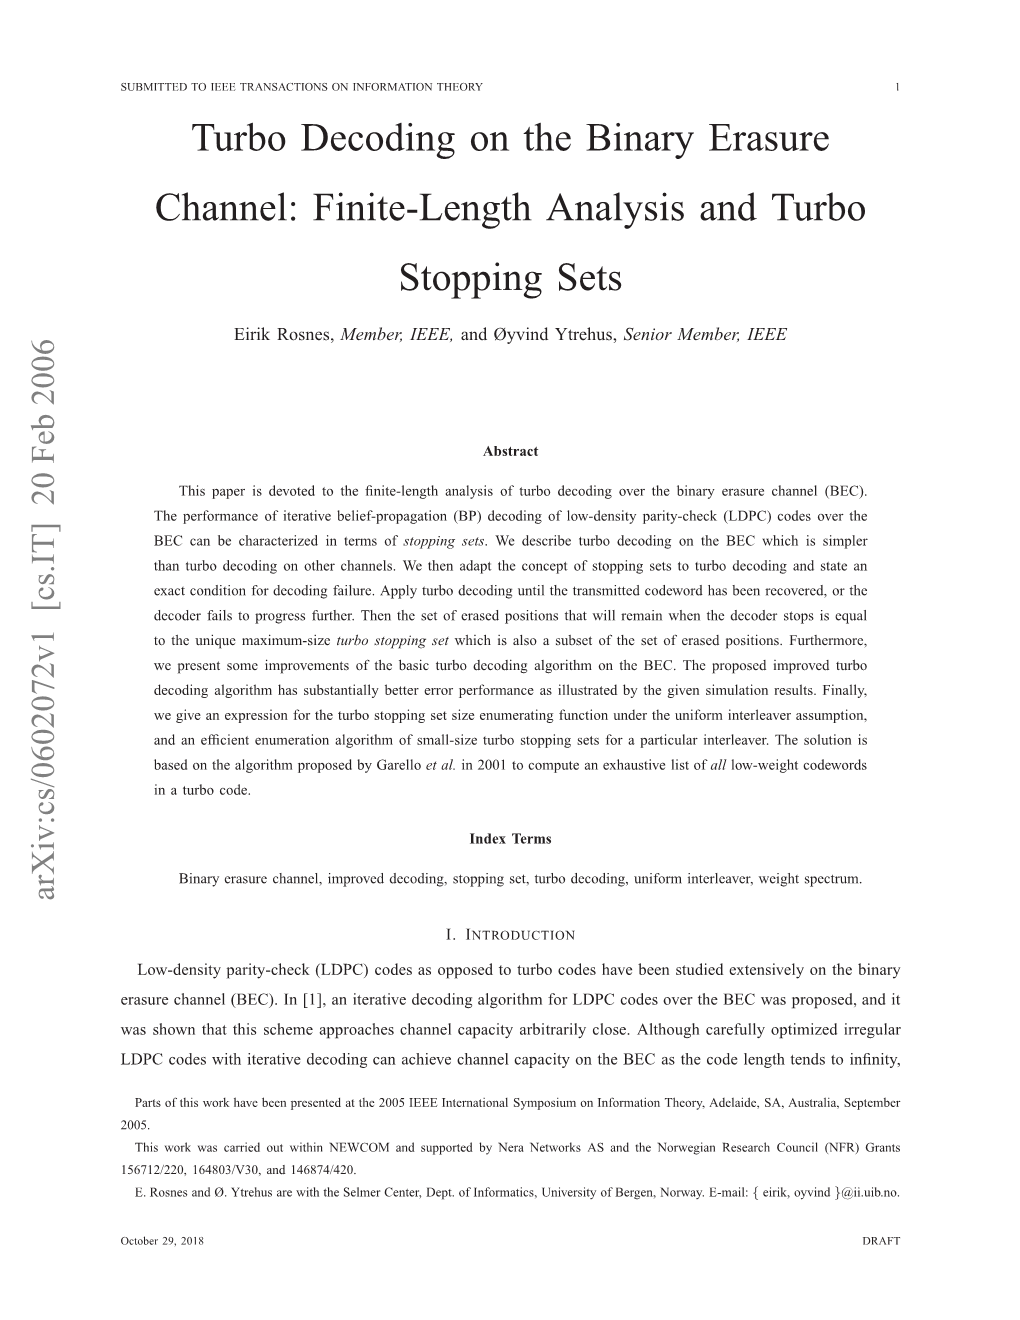 Turbo Decoding on the Binary Erasure Channel: Finite-Length Analysis